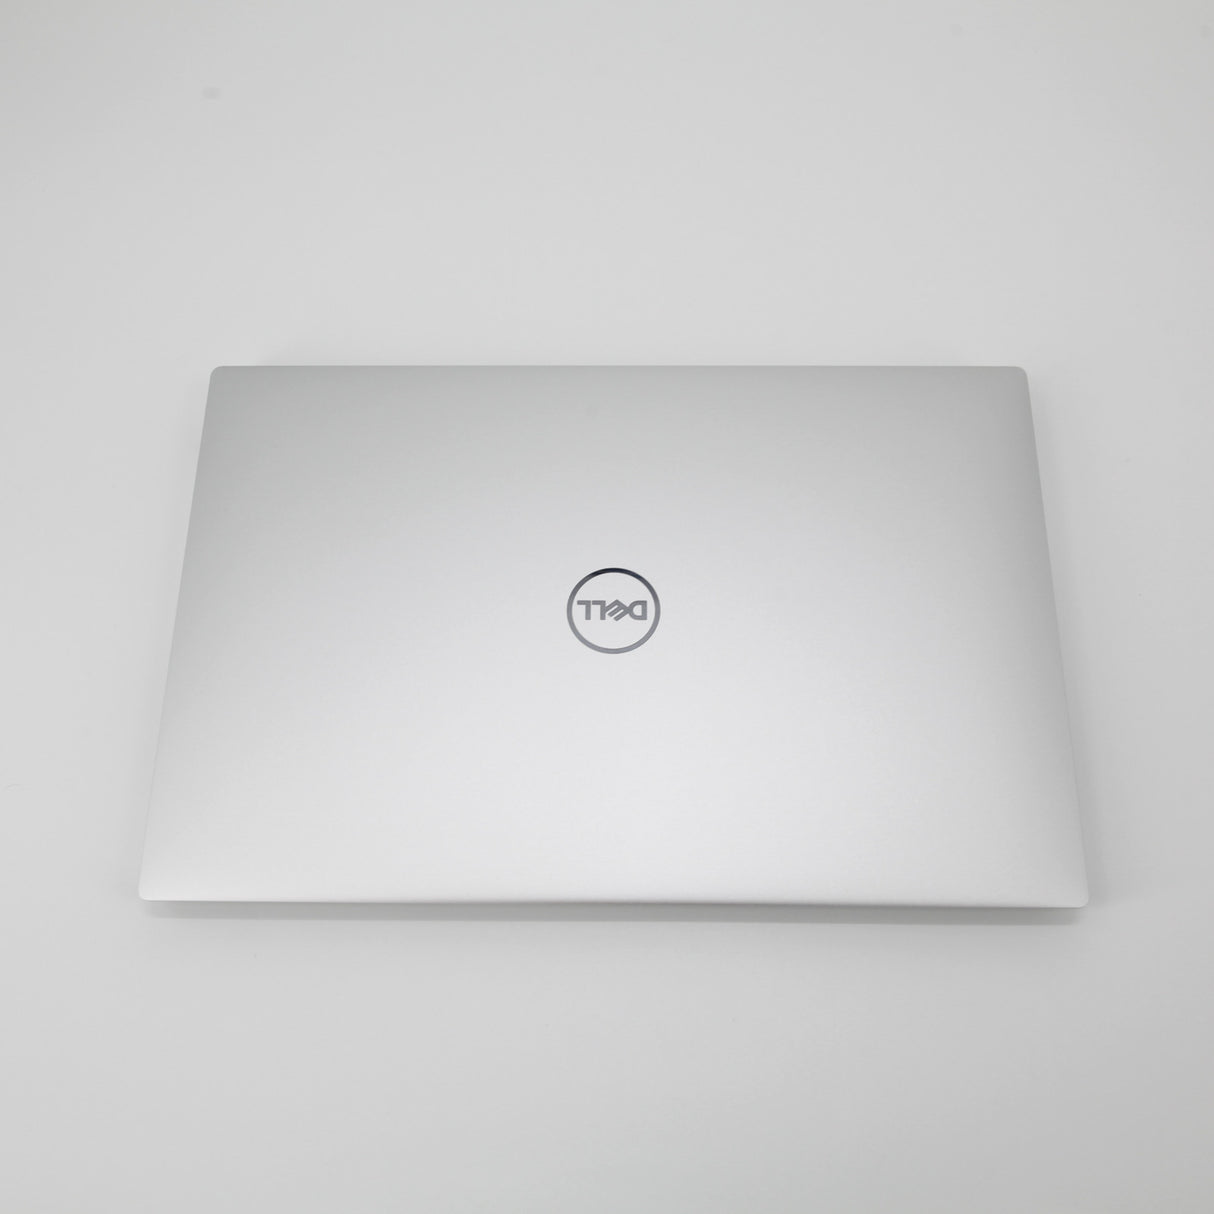 Dell XPS 13 9300 4K Touch Laptop: Intel i7 10th Gen 1TB SSD 16GB RAM Warranty - GreenGreenStoreUK